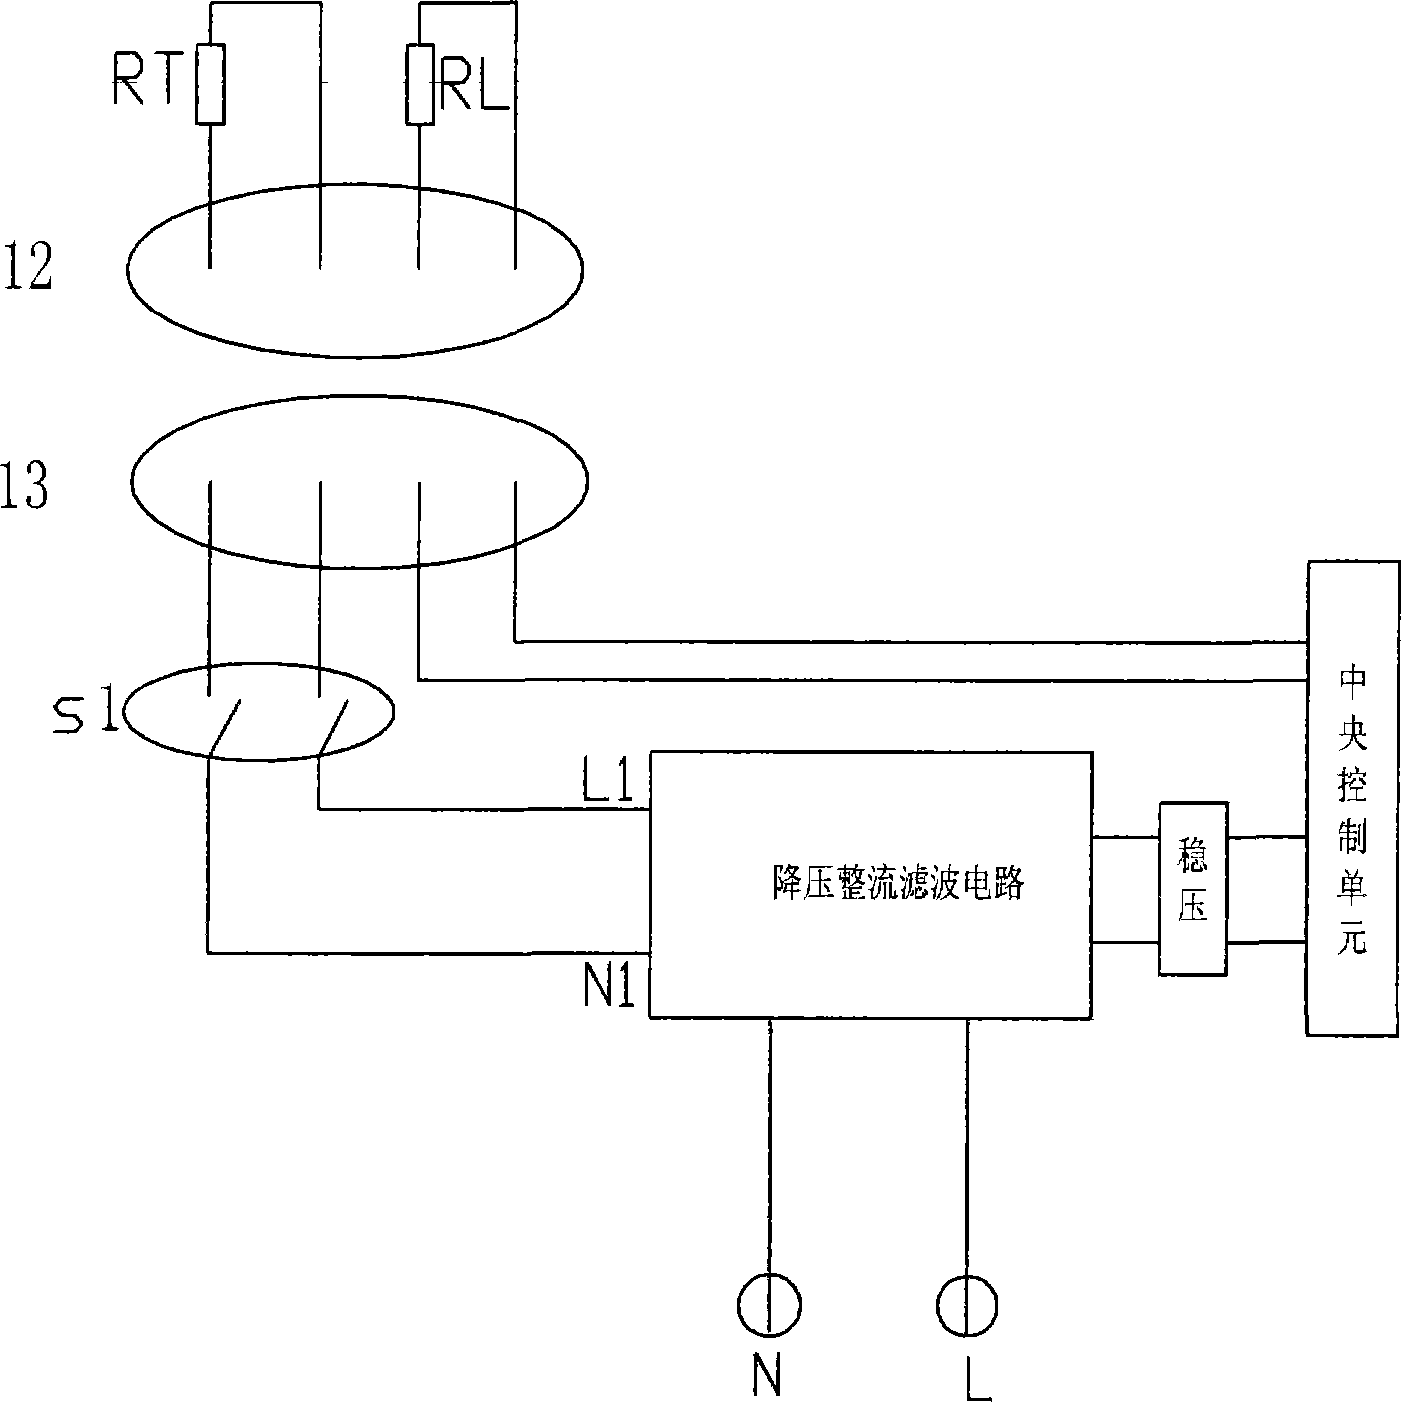 Microcomputer controlled liquid heating device